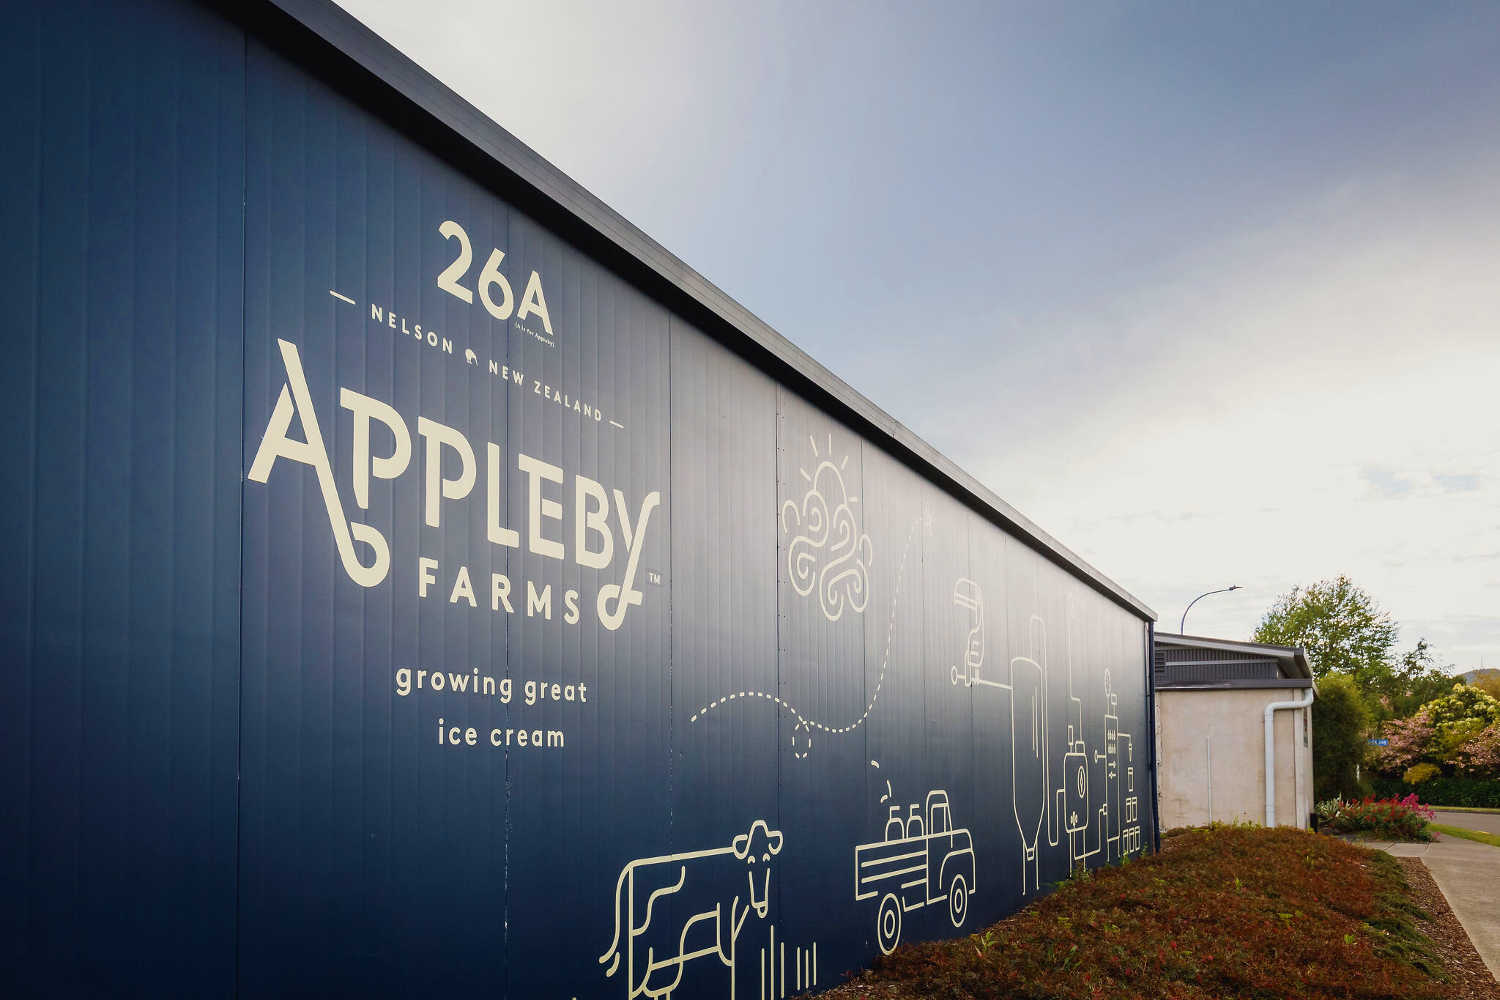 Appleby Farms Ice Cream, New Zealand @Tim Williams